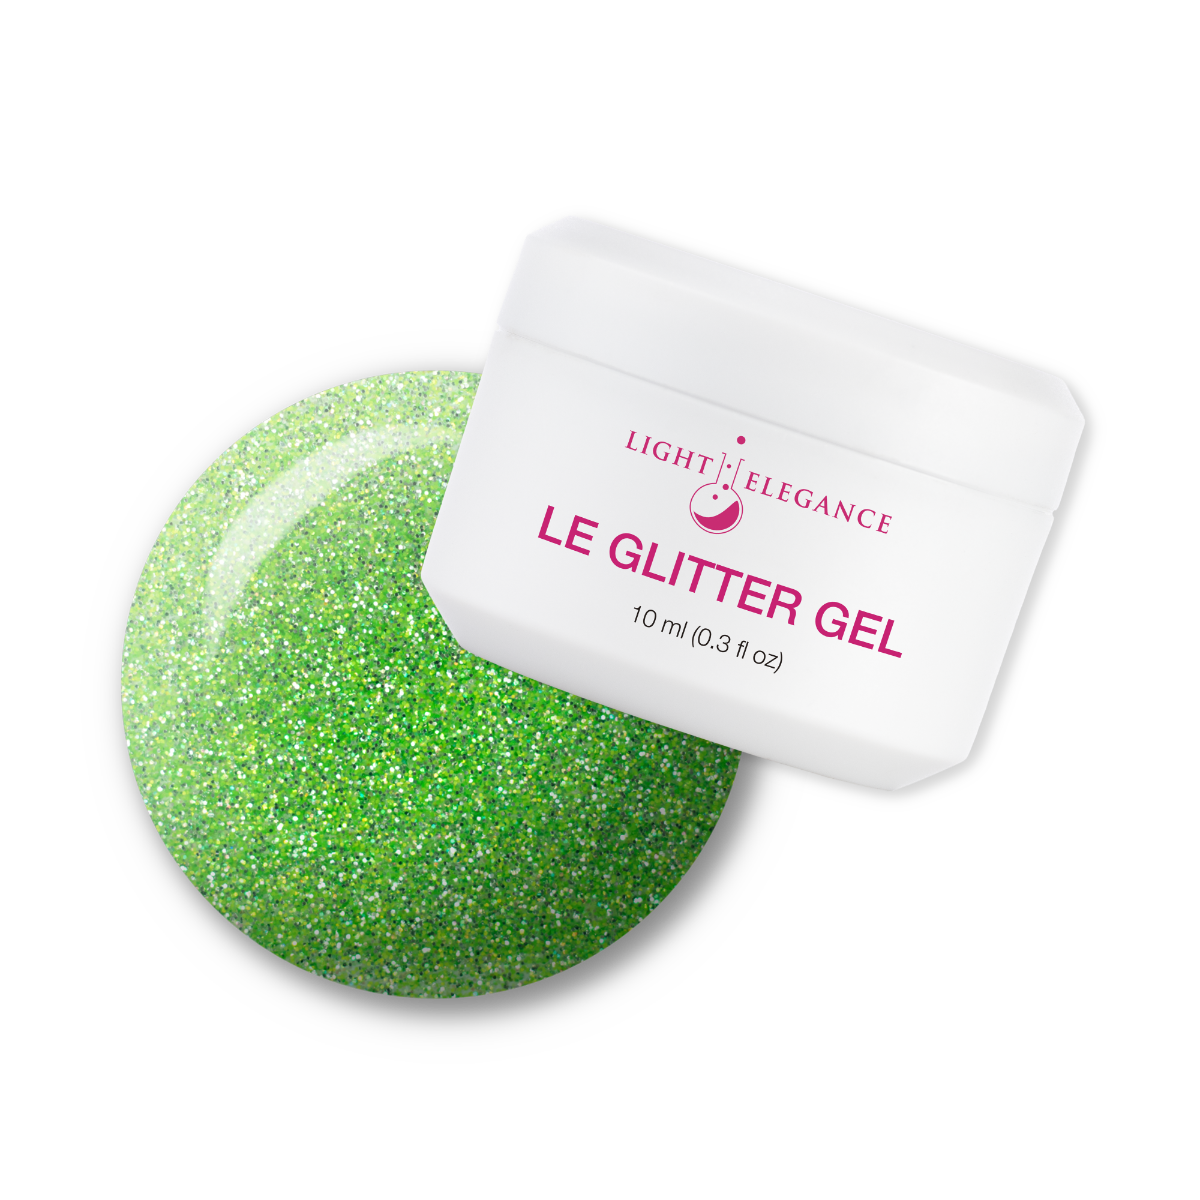 Light Elegance Glitter Gel - Kiwi to My Heart :: New Packaging - Creata Beauty - Professional Beauty Products